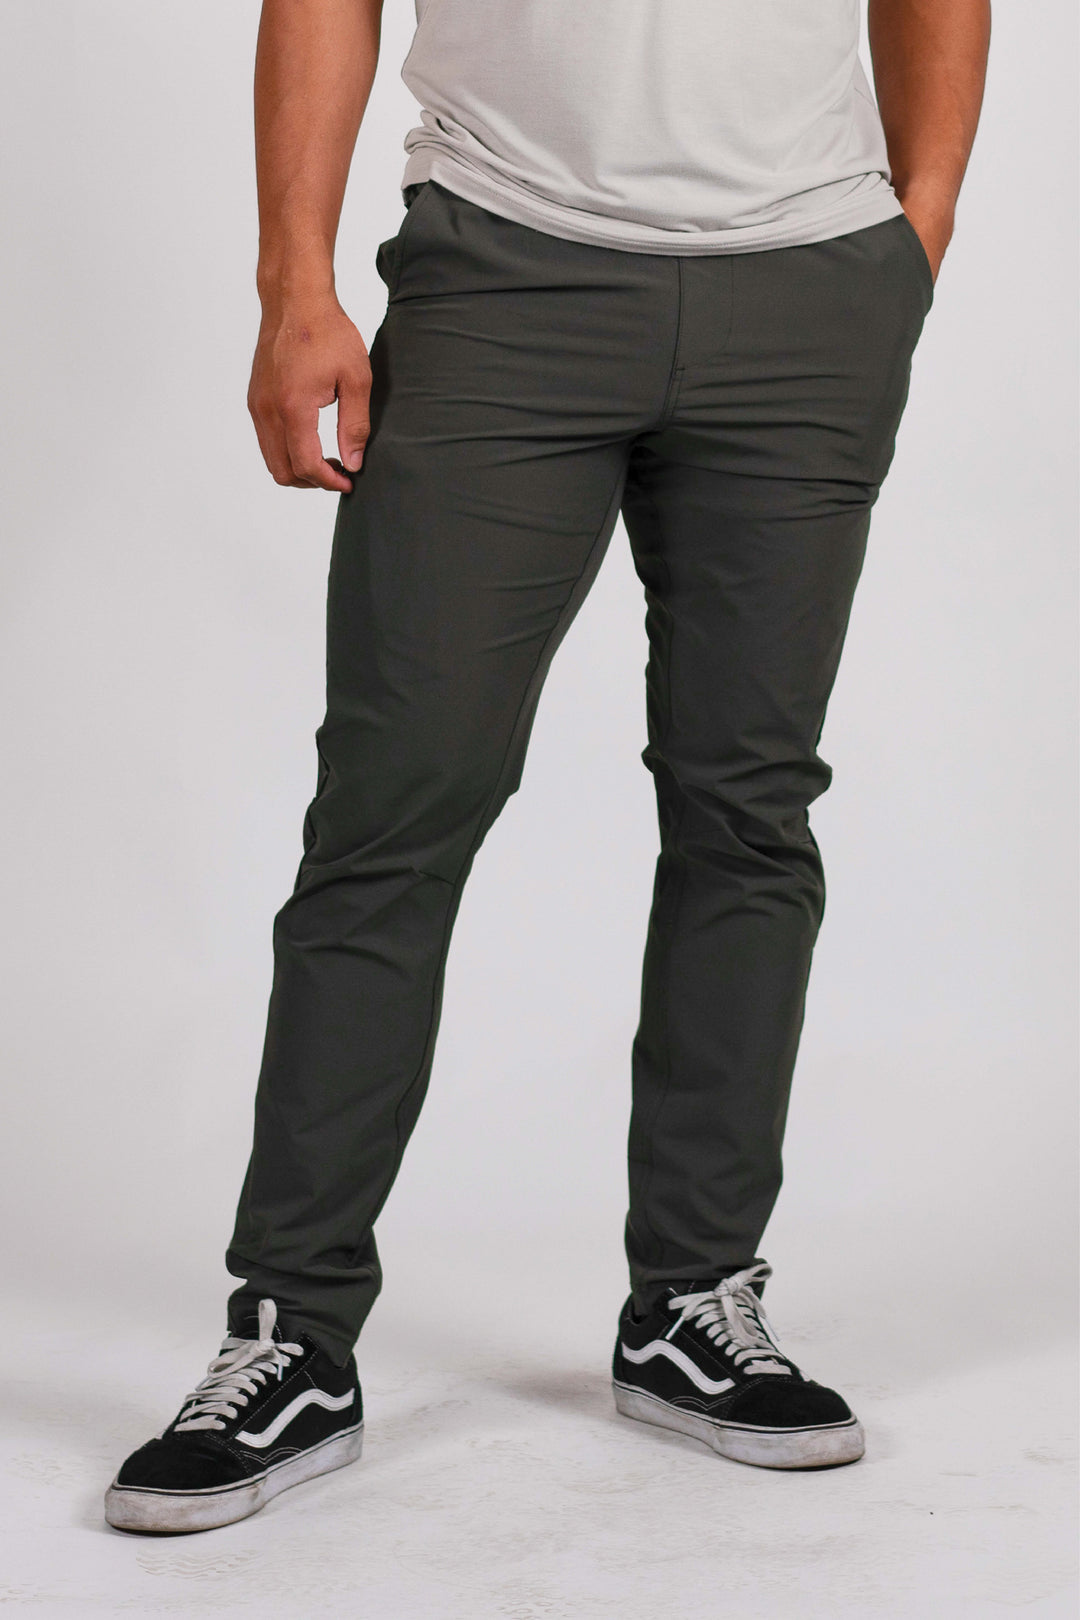 2-Pack Bundle: Men's Rocky Mountain Pants (Size M)